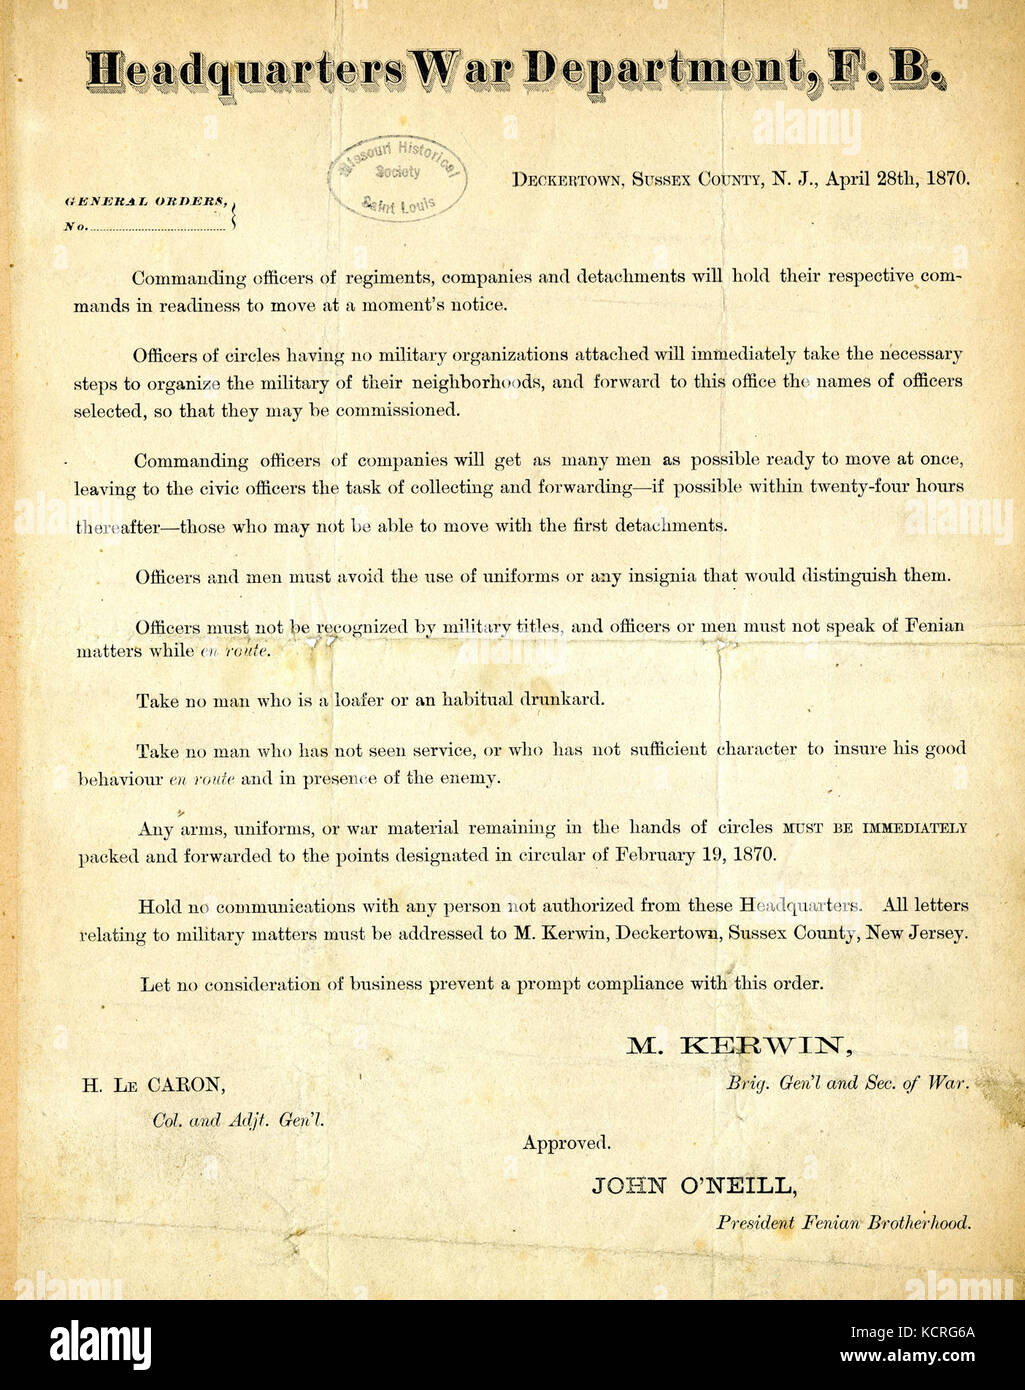 General Orders of M. Kerwin., Headquarters, War Department, Fenian Brotherhood, Deckertown, Sussex County, New Jersey, April 28, 1870 Stock Photo